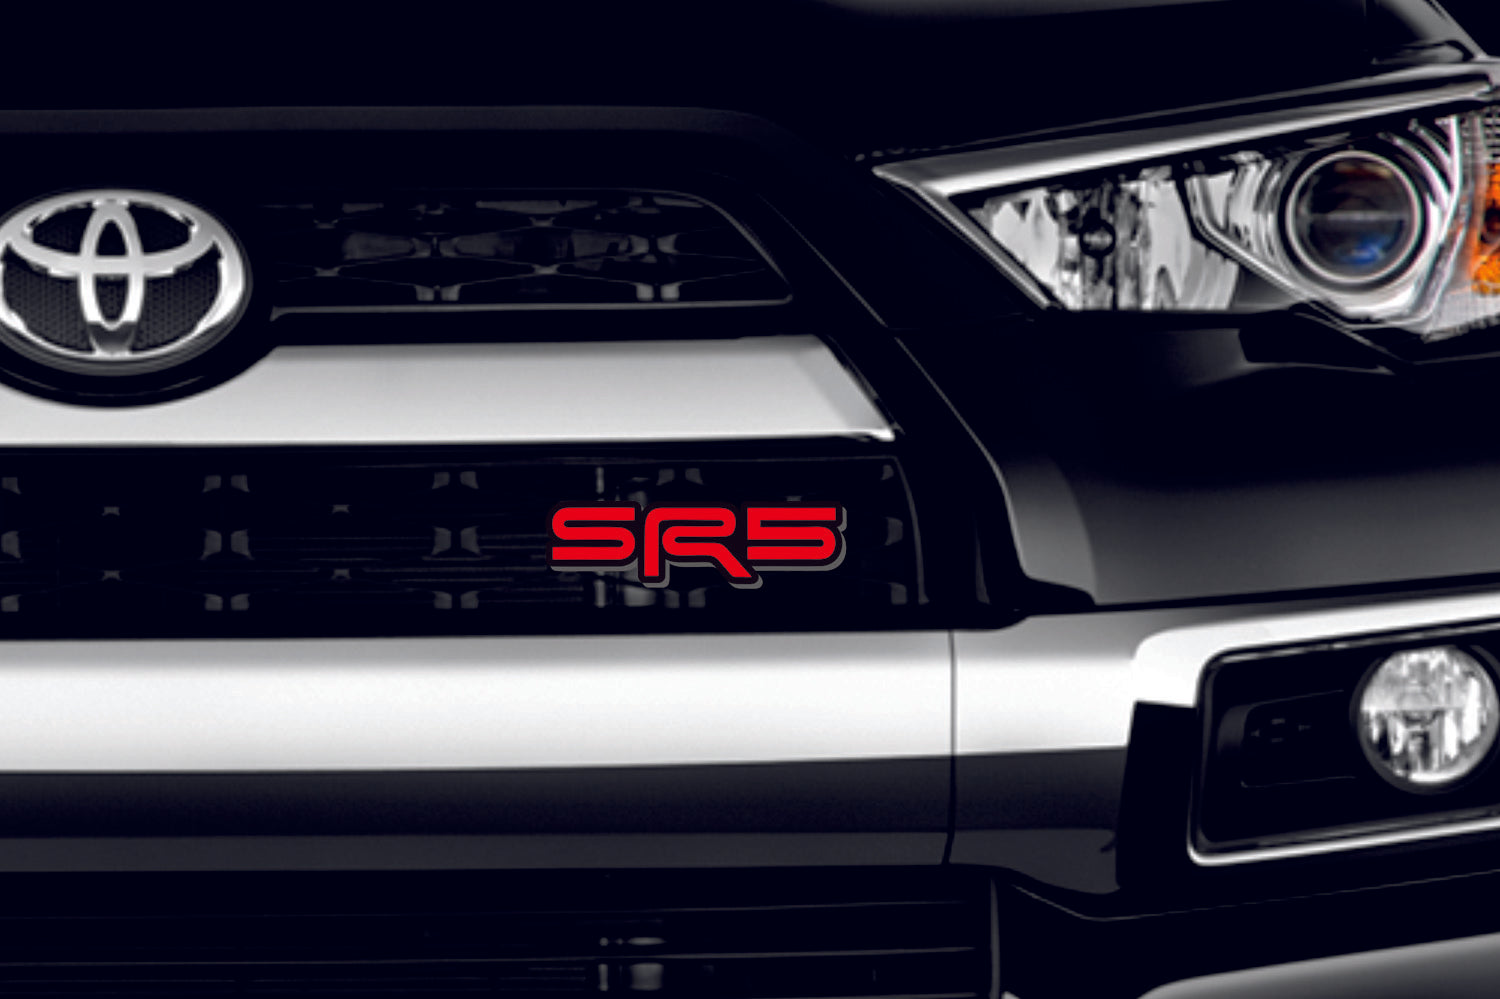 Toyota Radiator grille emblem with SR5 logo